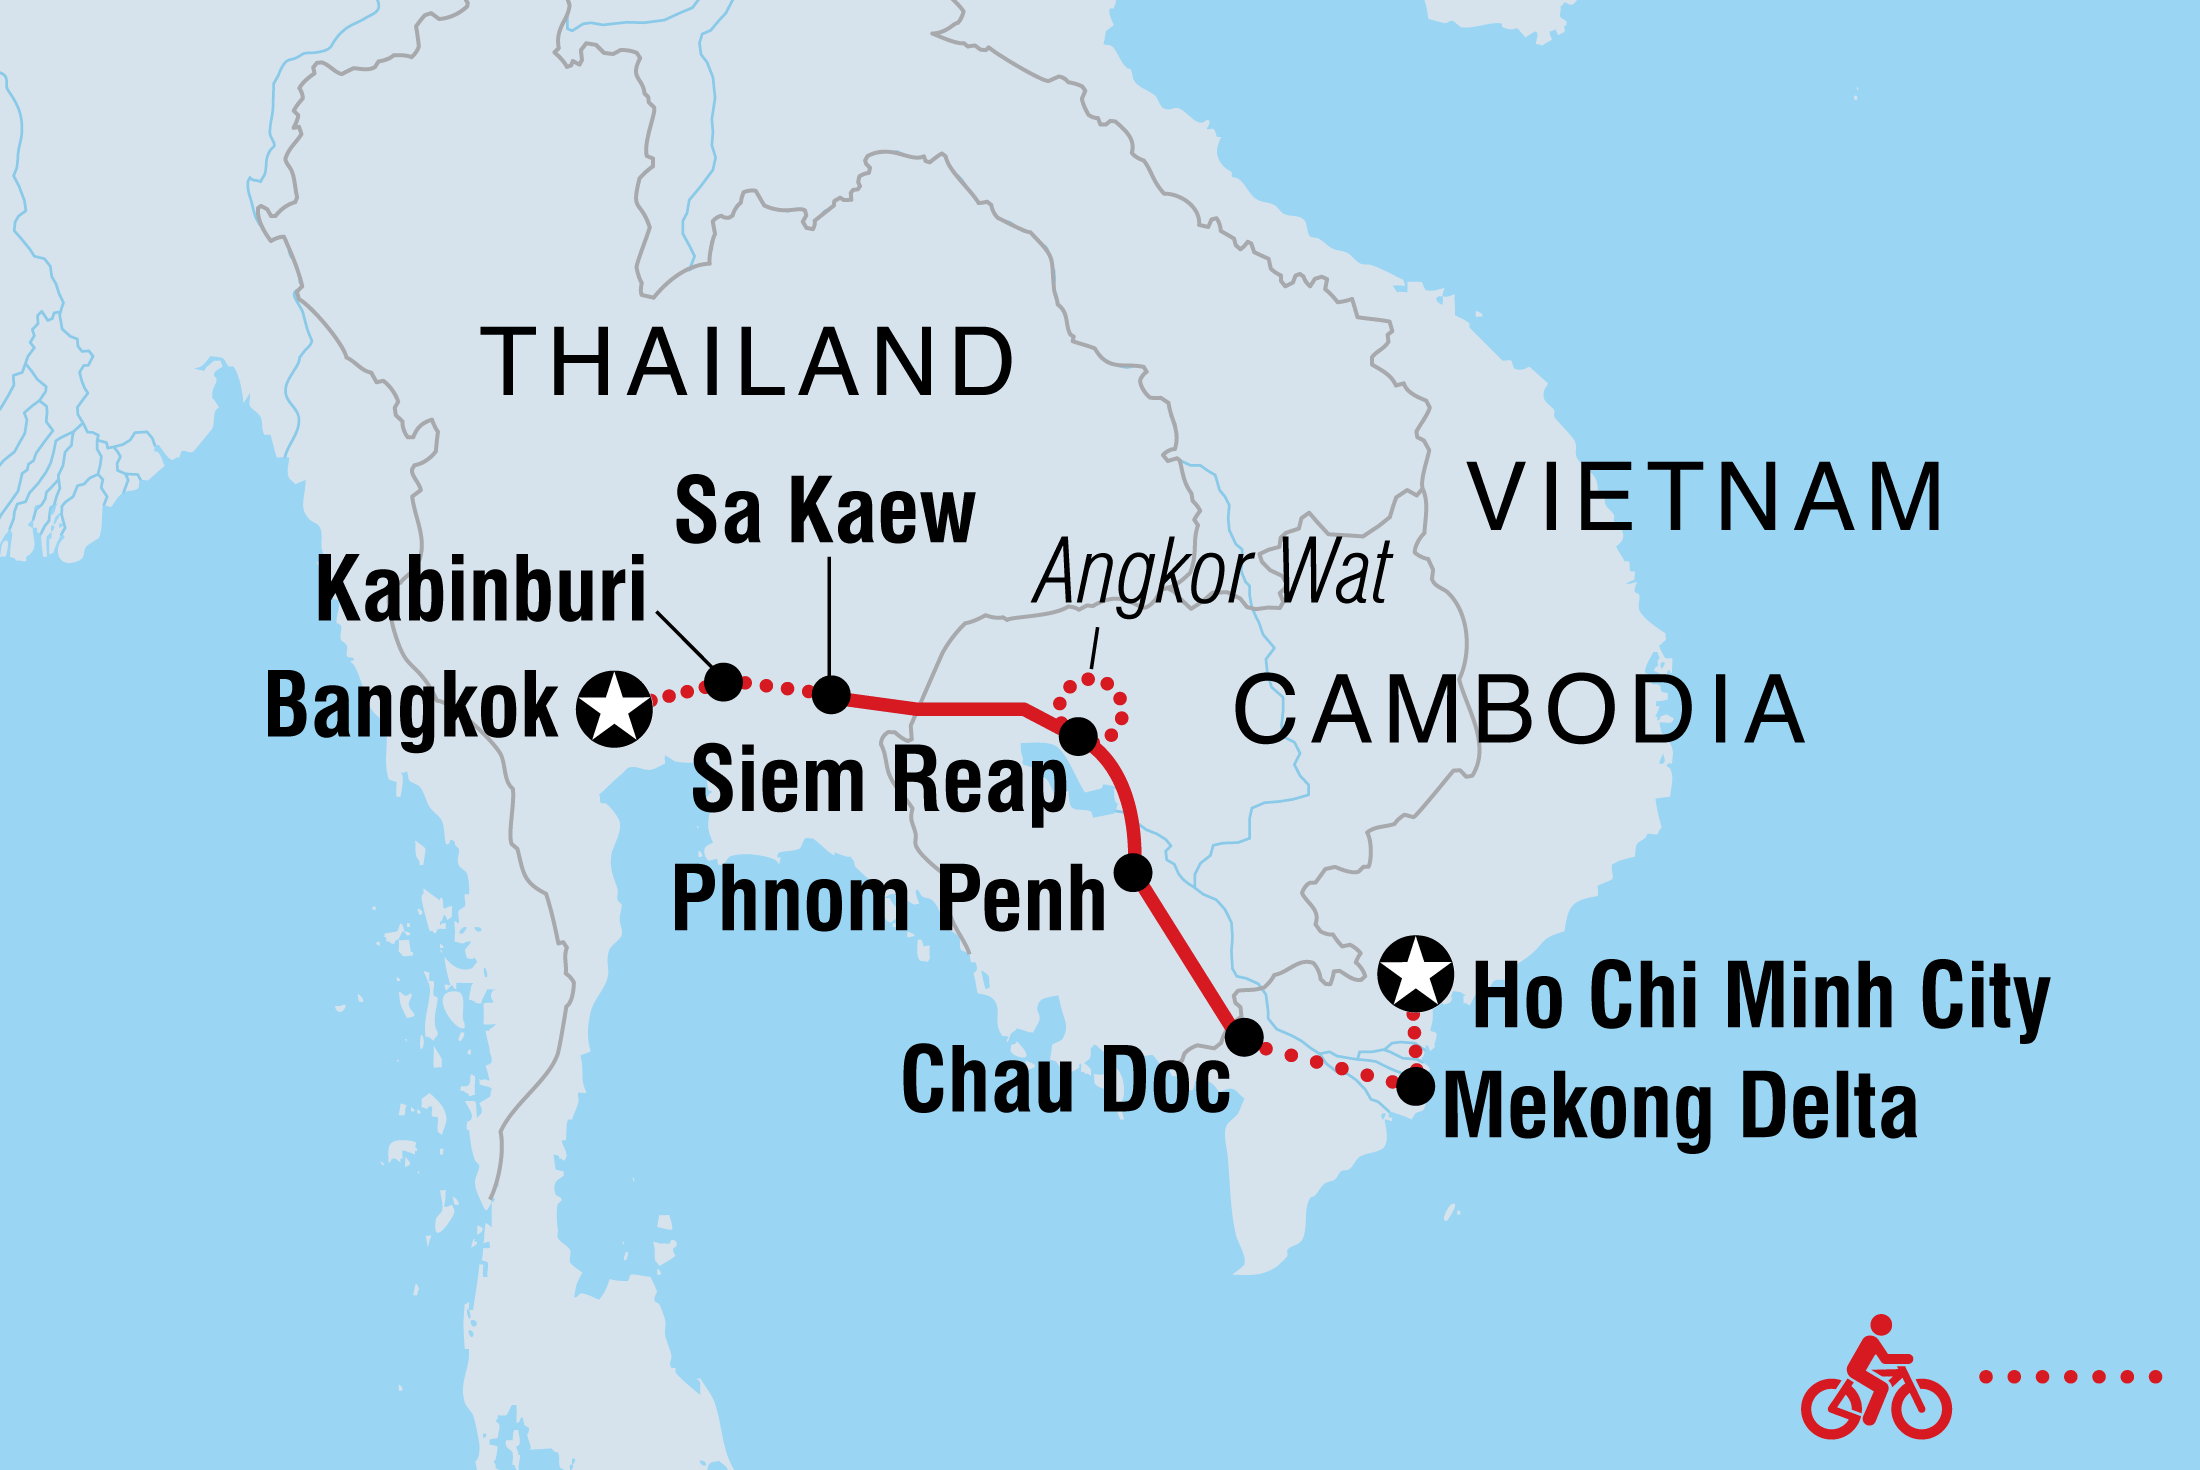 day trip from bangkok to cambodia